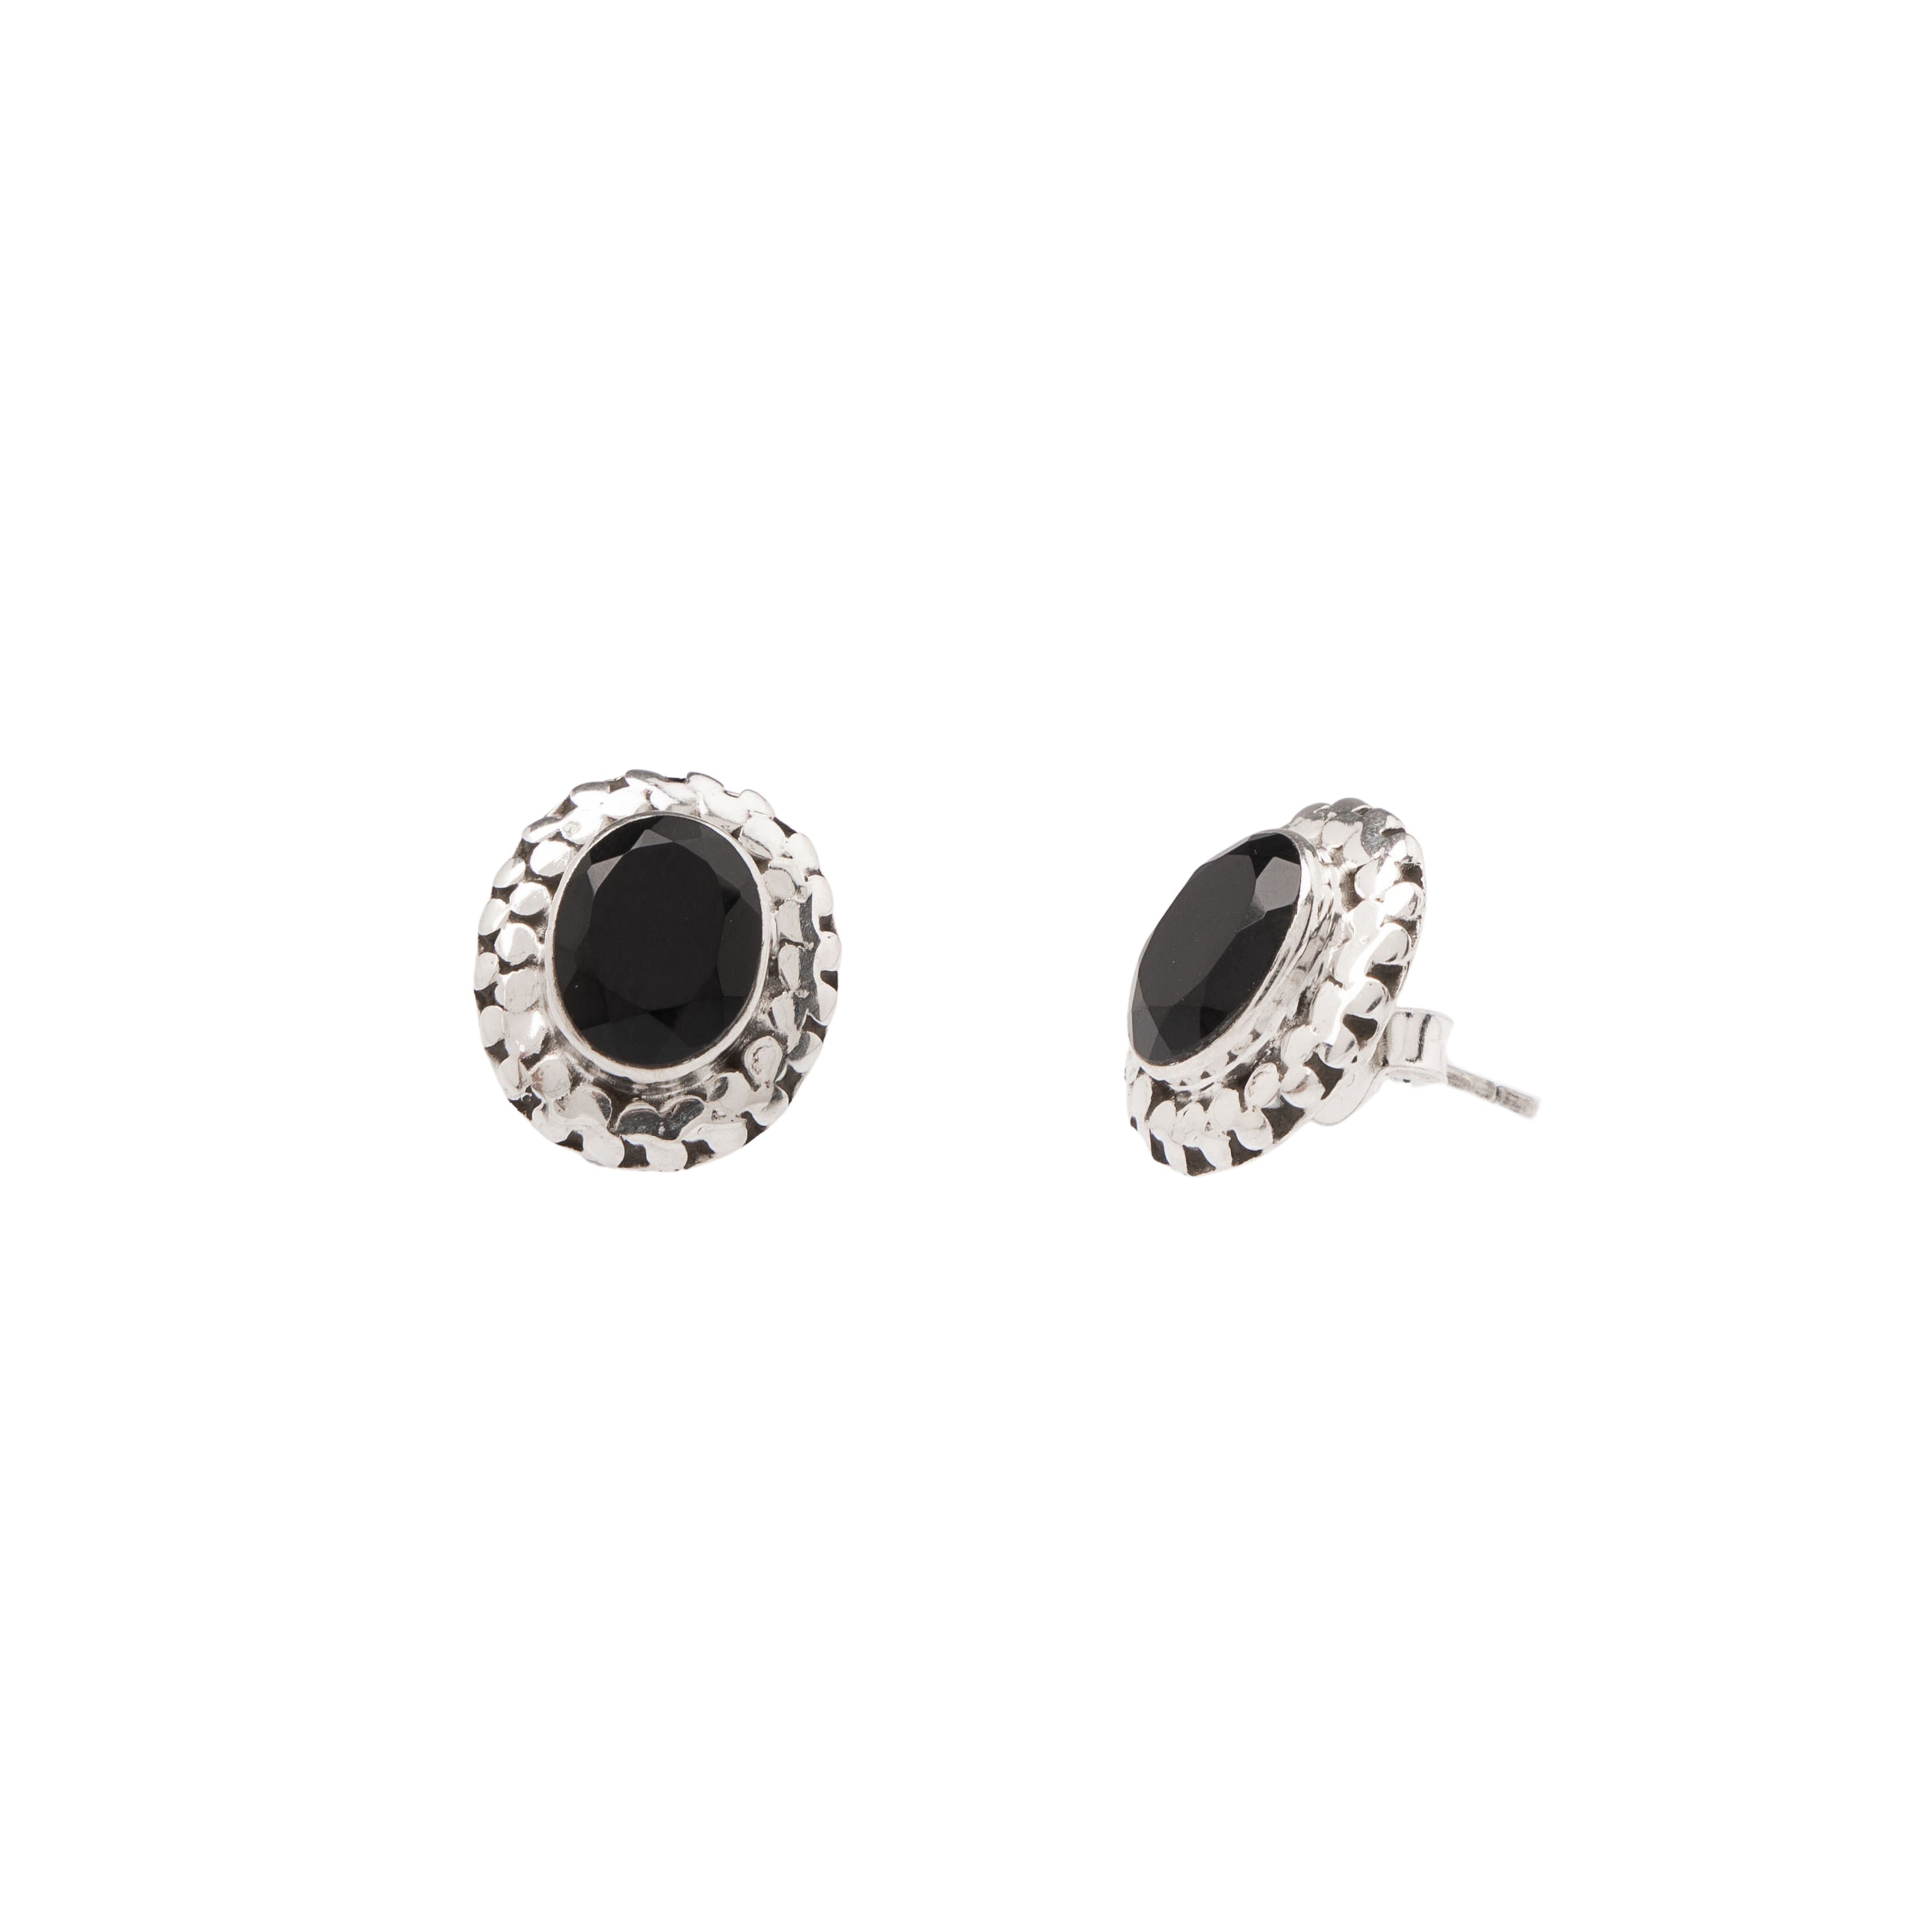 Black Onyx Stud Earrings Silver 925